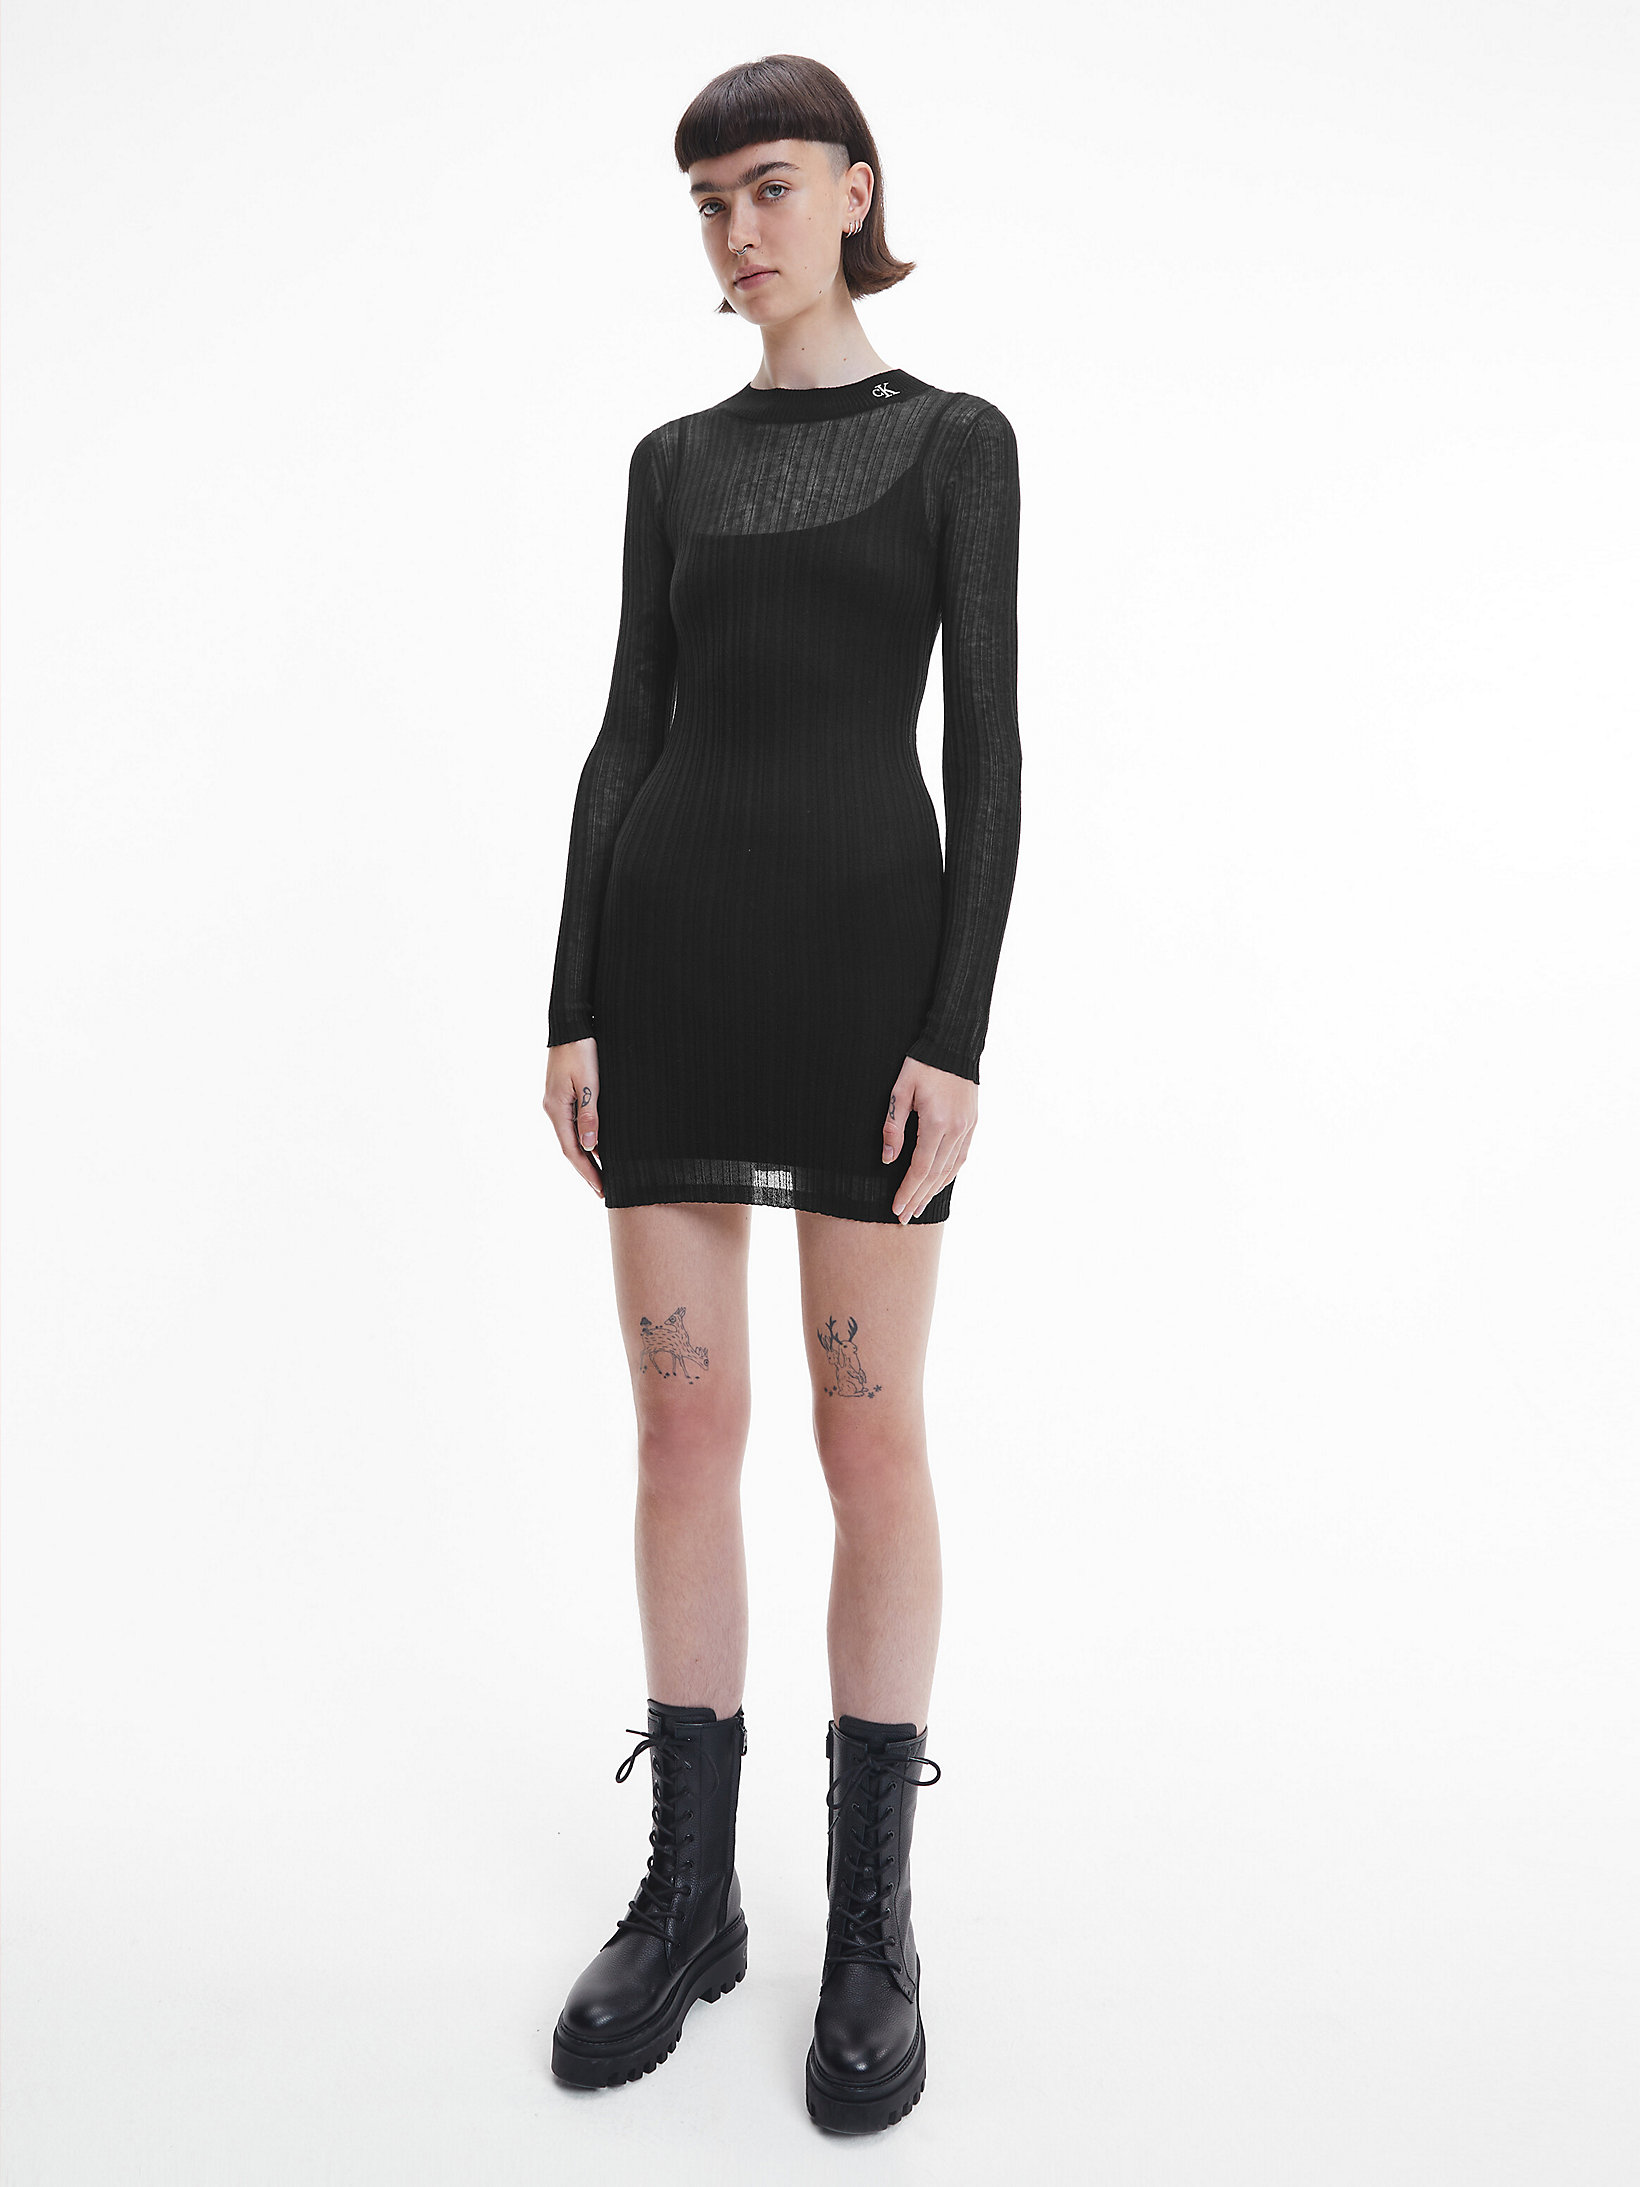 CK Black Sheer Knit Double Layer Midi Dress undefined women Calvin Klein